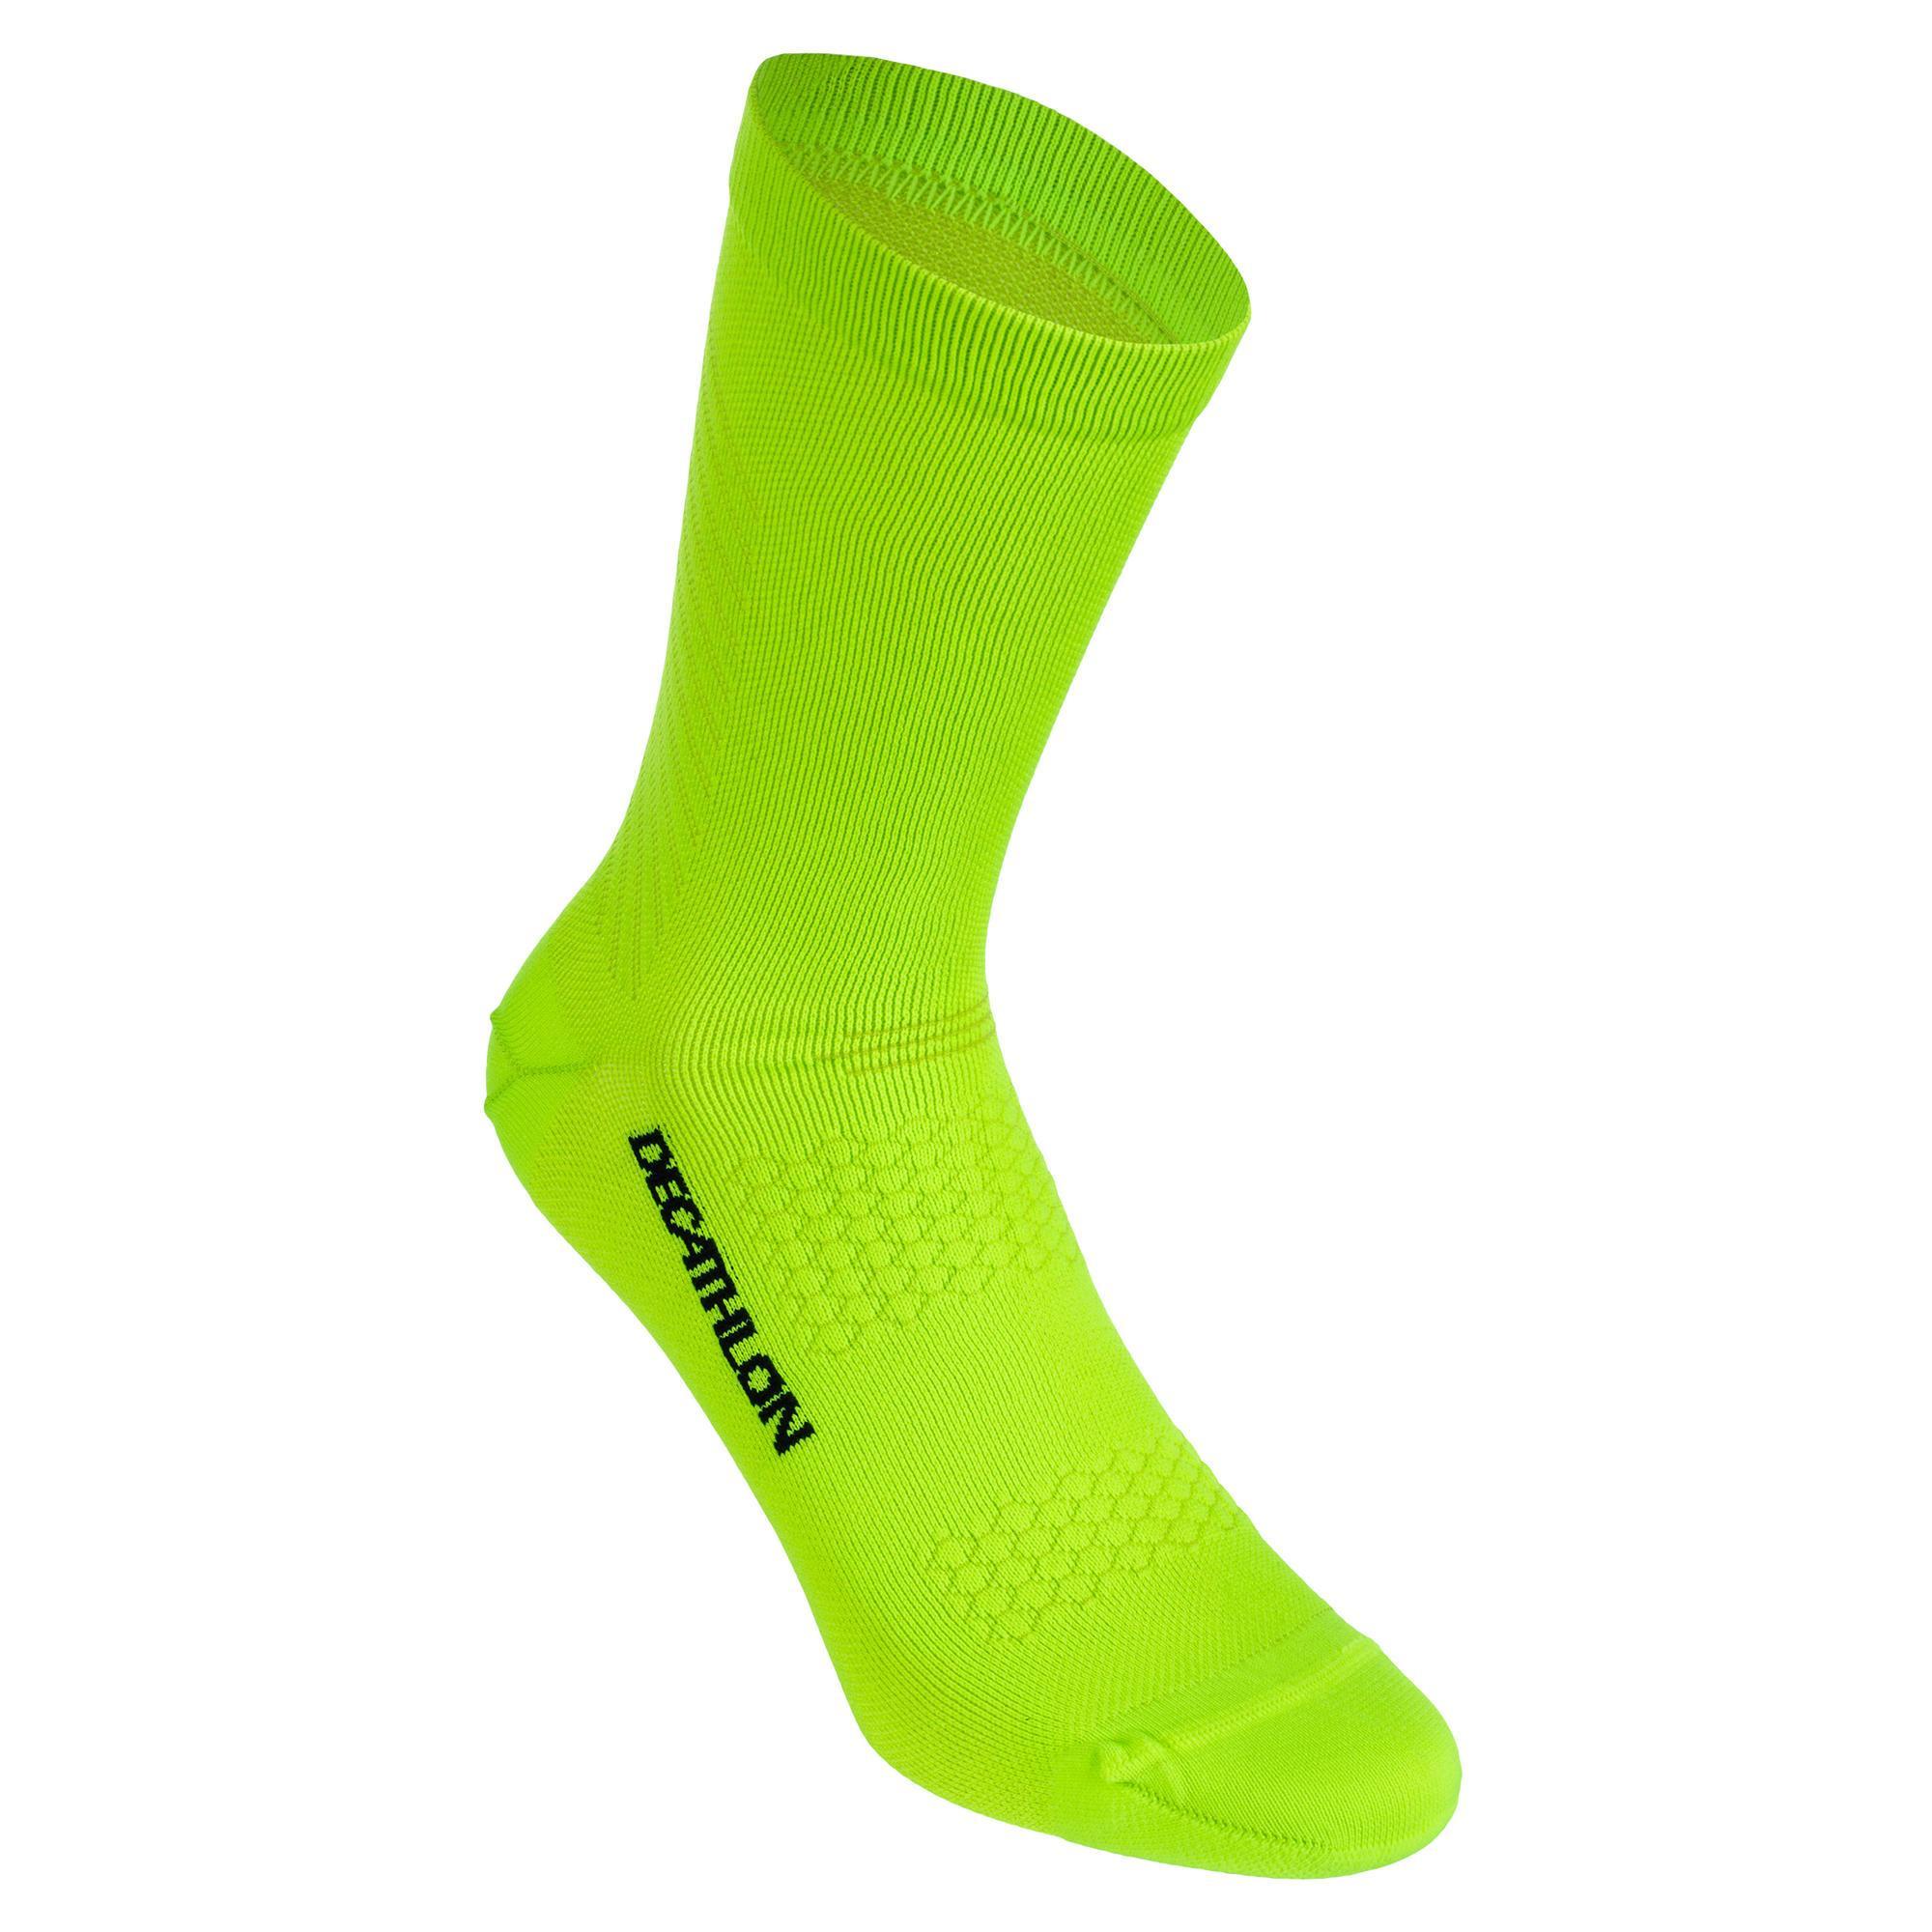 900 Road Cycling Socks - Neon VAN RYSEL 